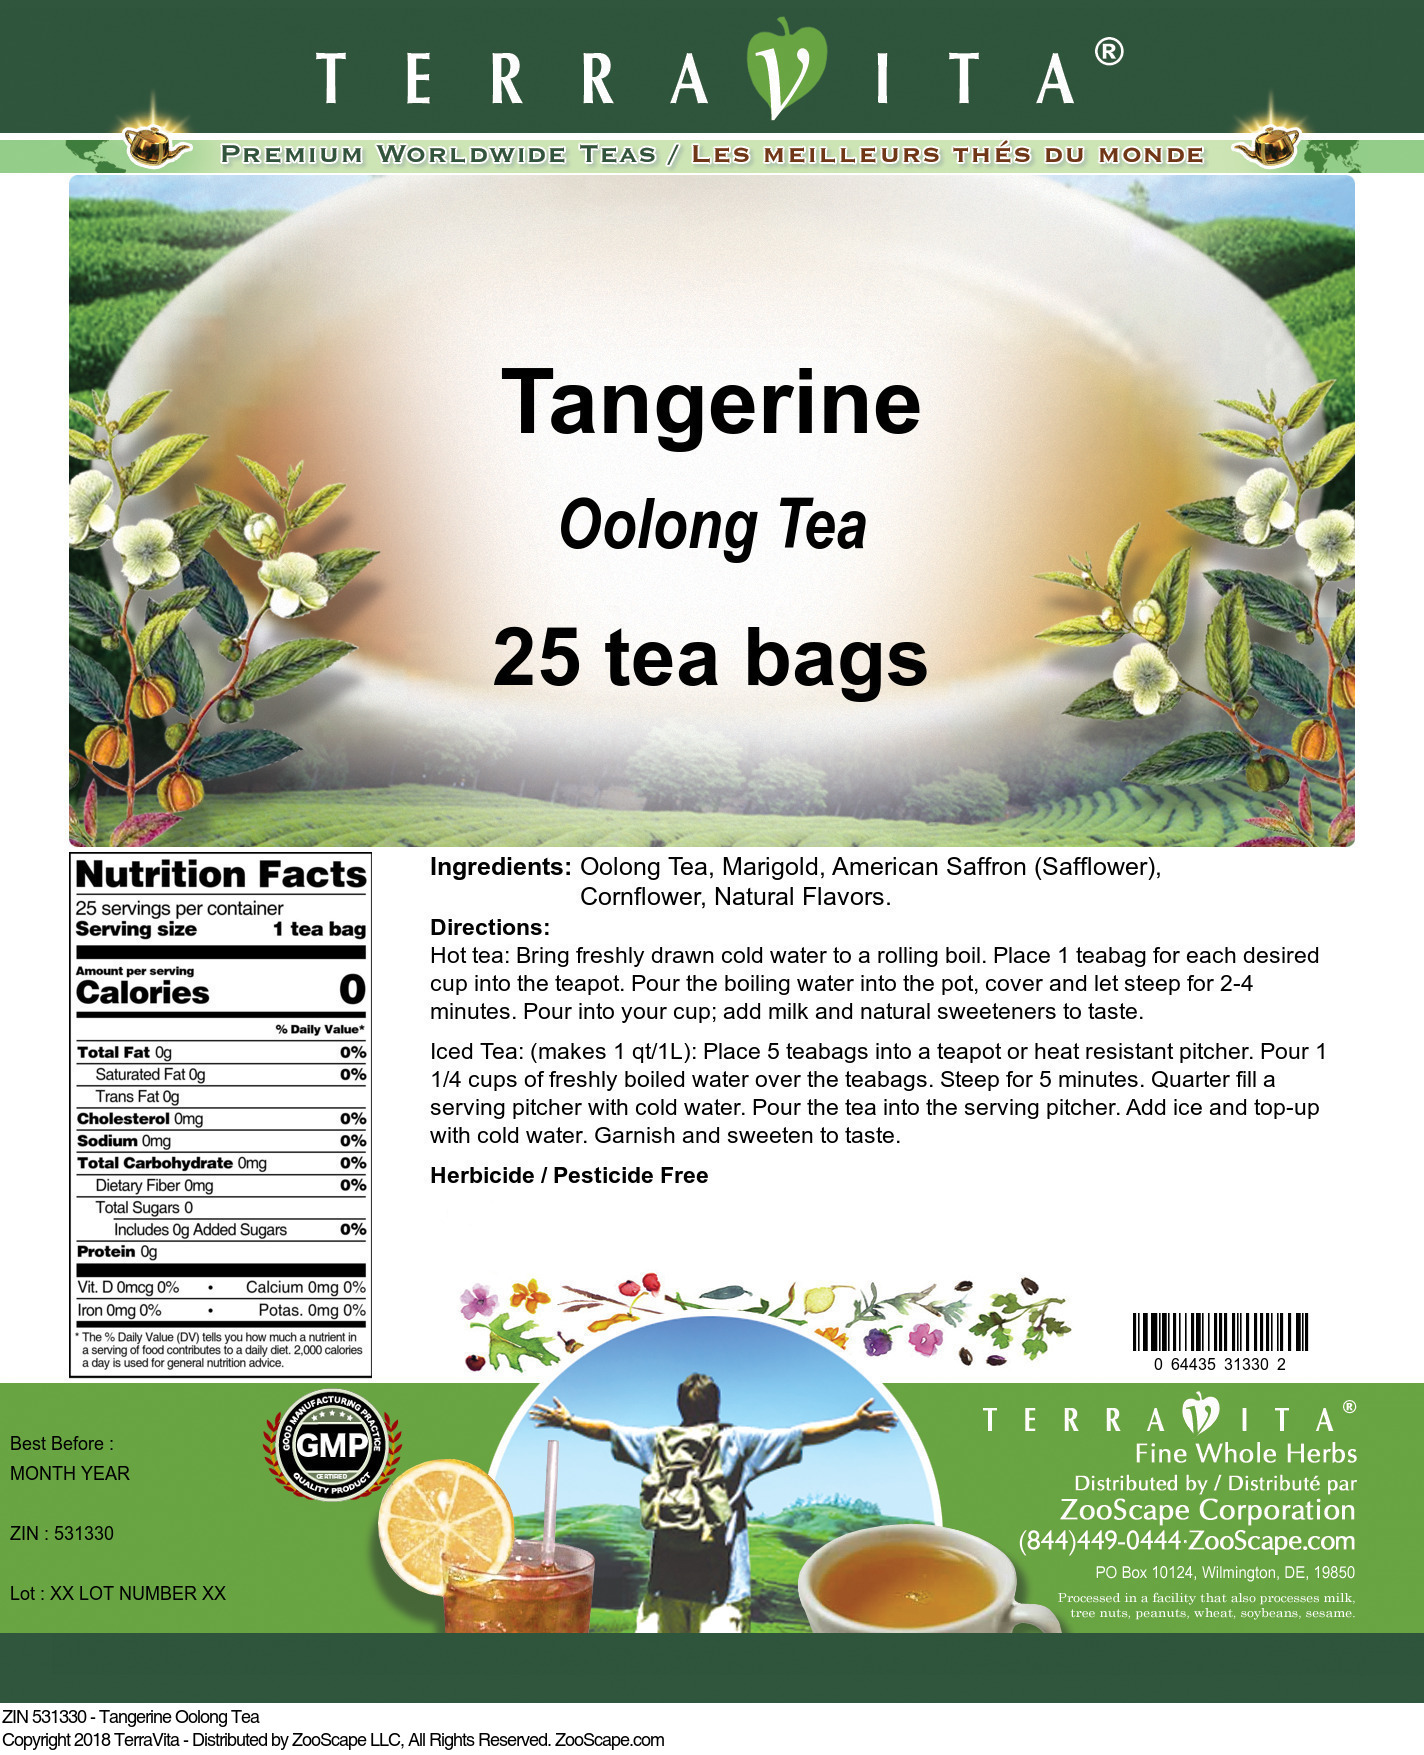 Tangerine Oolong Tea - Label